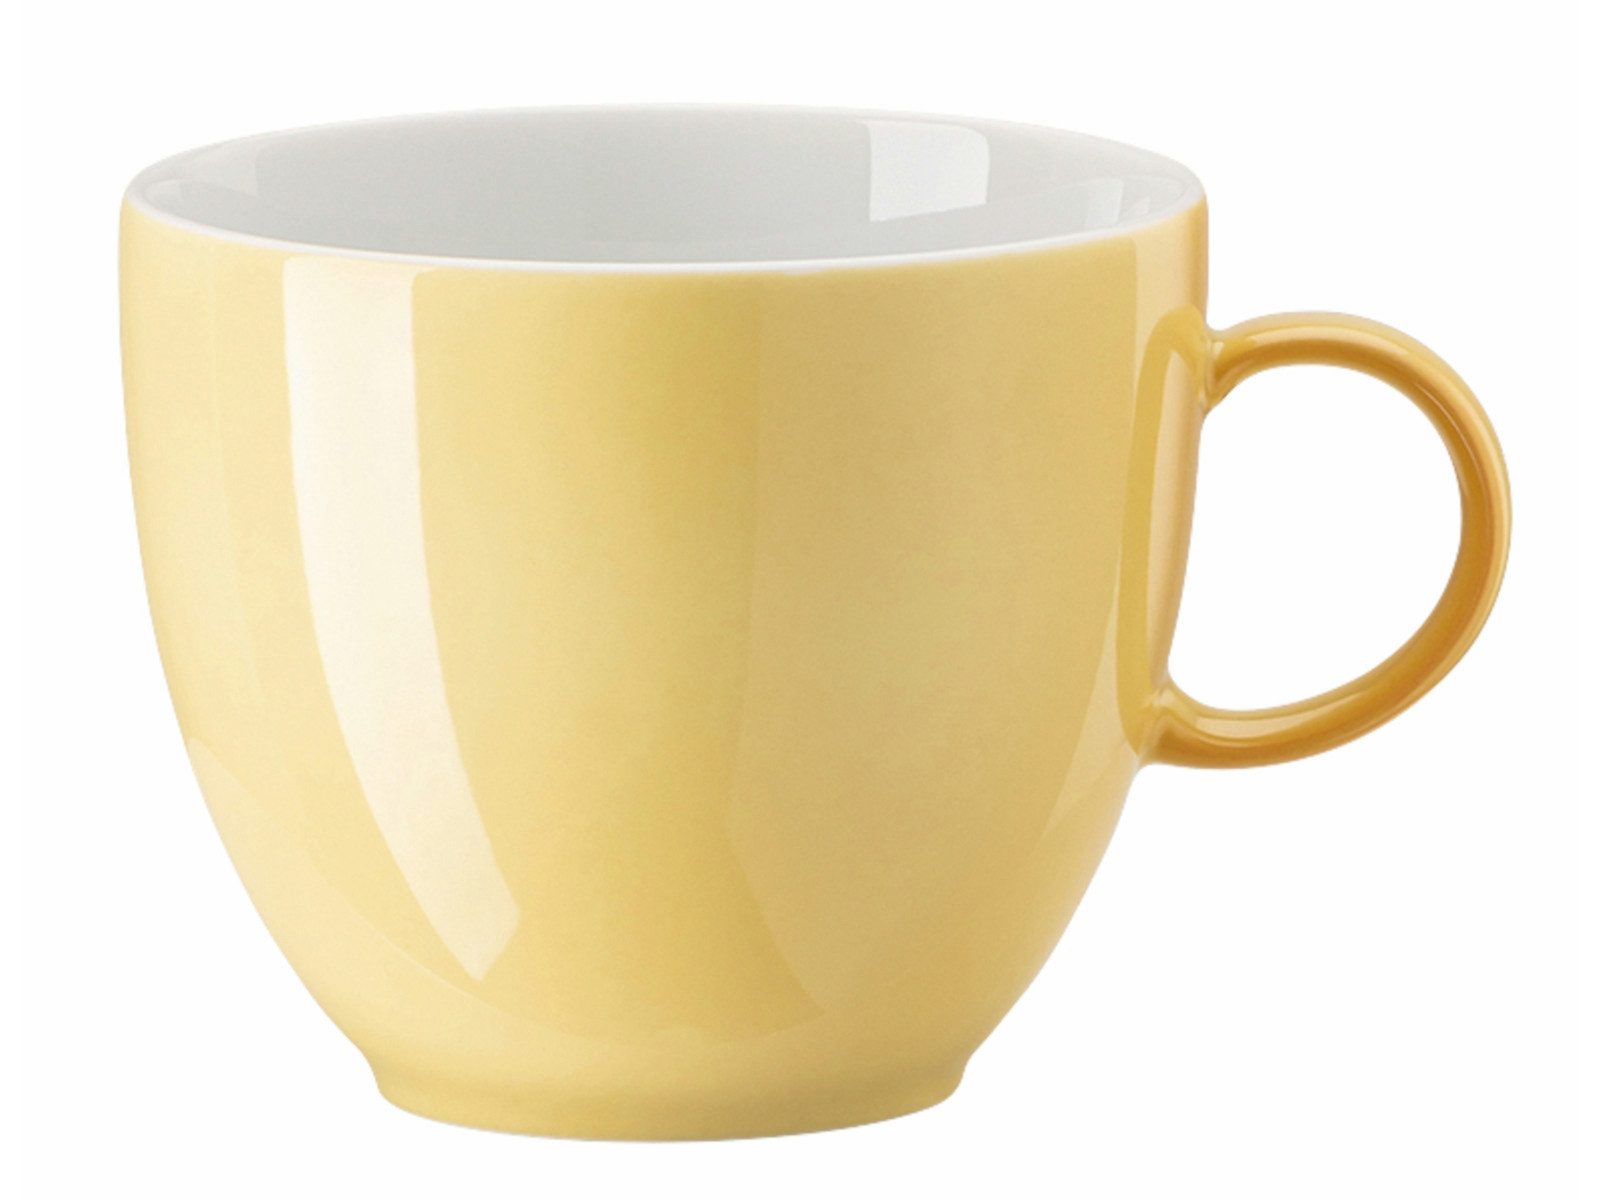 Thomas Porzellan Tasse Sunny Day Soft Yellow Kaffee-Obertasse 0,2 l, Porzellan